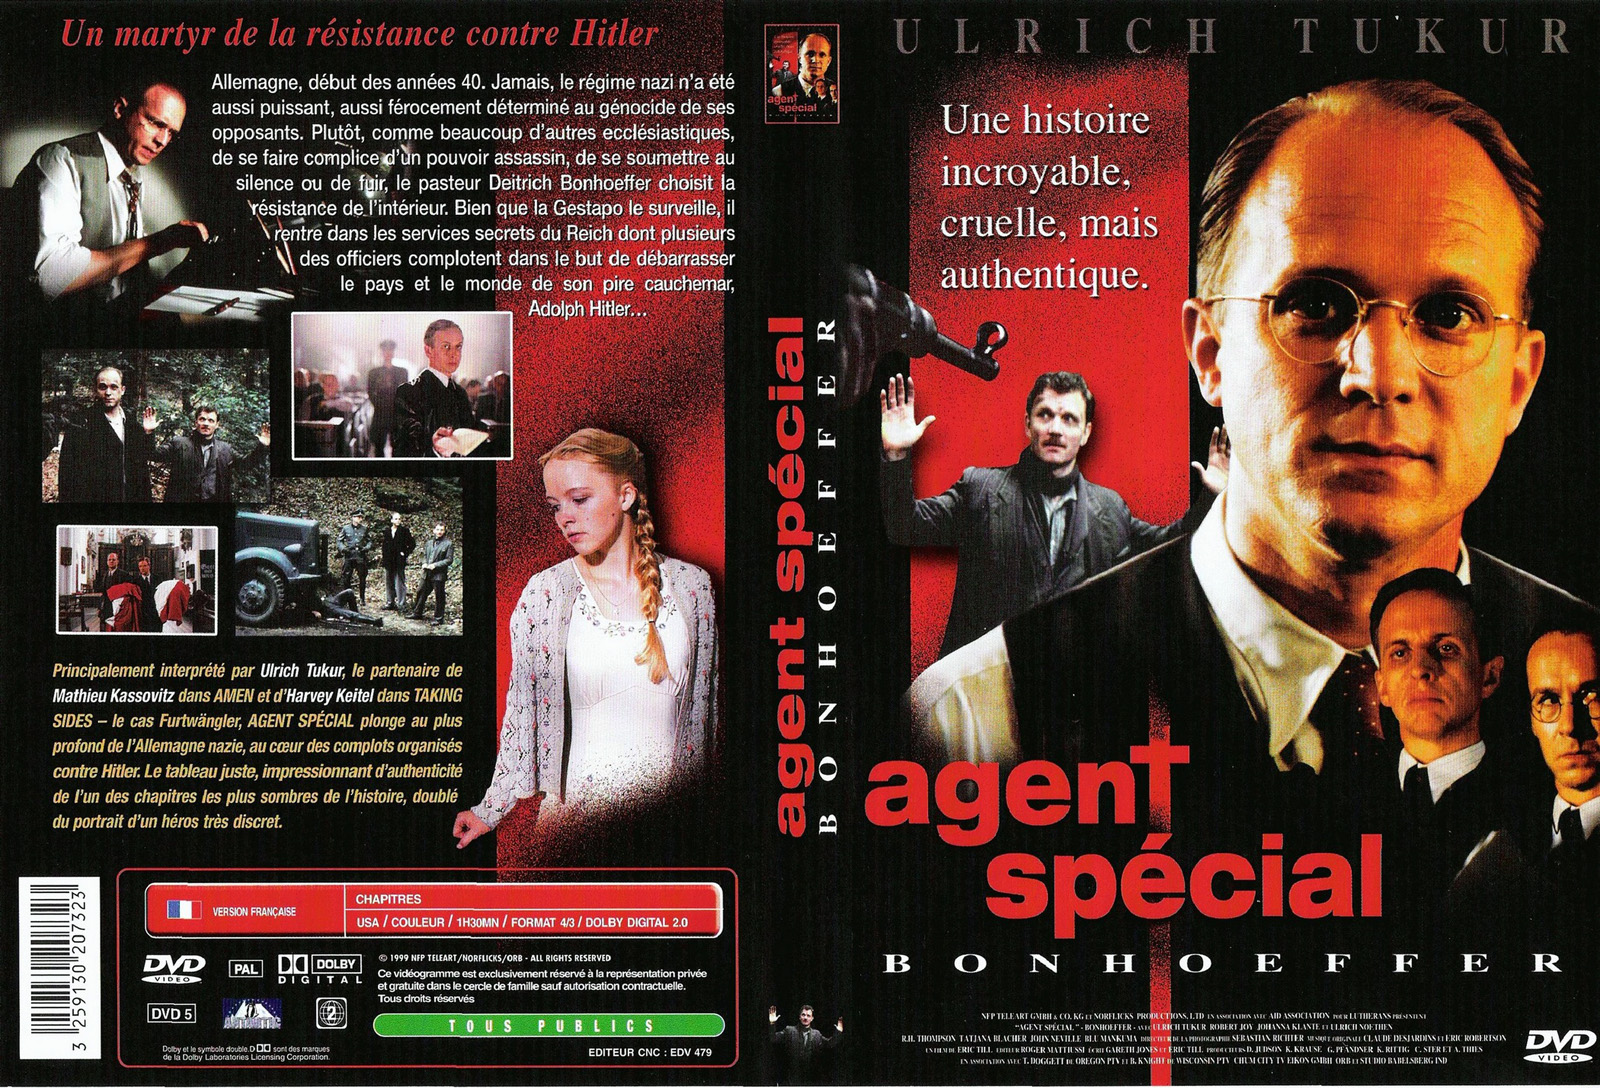 Jaquette DVD Agent special Bonhoffer